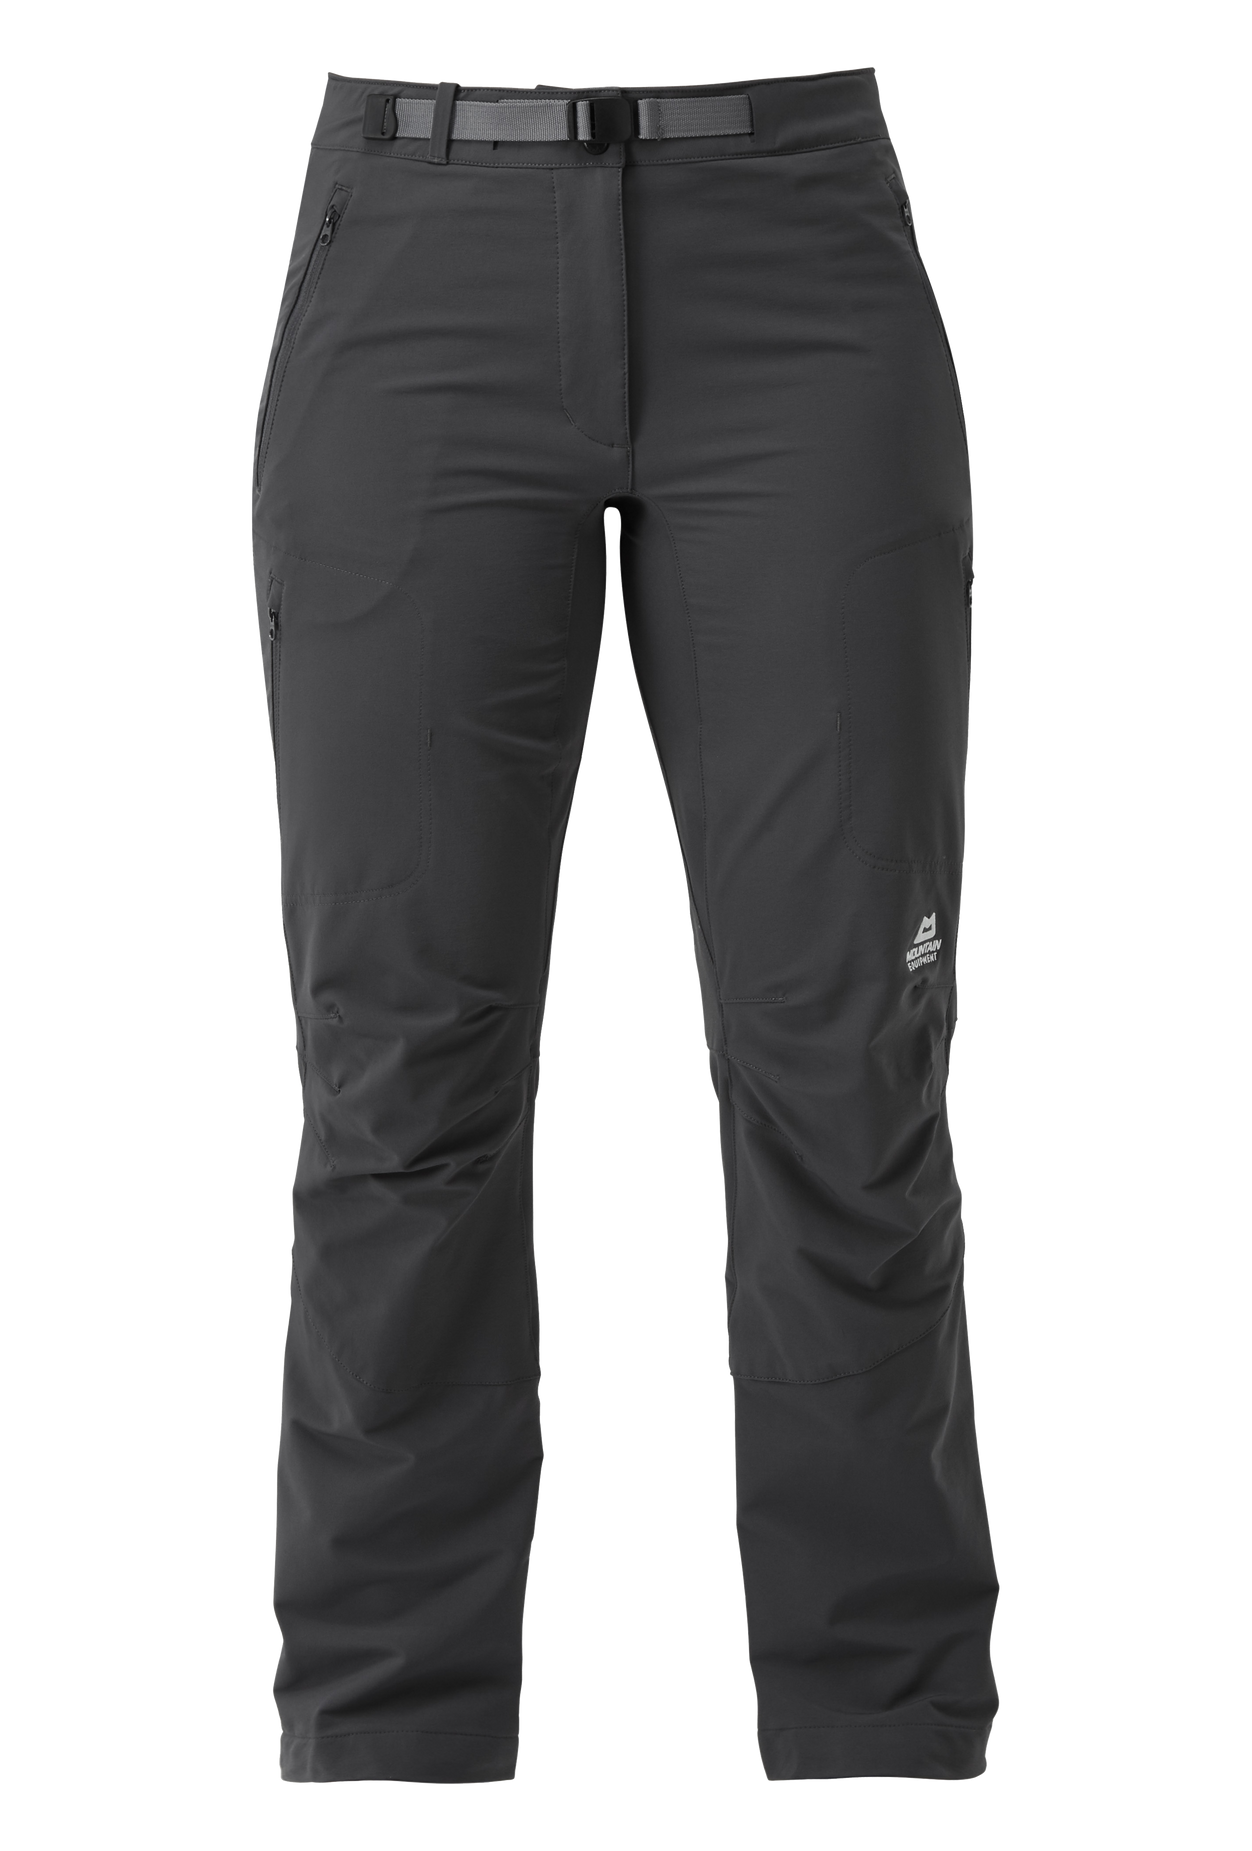 Mountain Equipment dámské softshellové kalhoty Chamois Wmns Pant Barva: Anvil Grey, Velikost: 8/XS